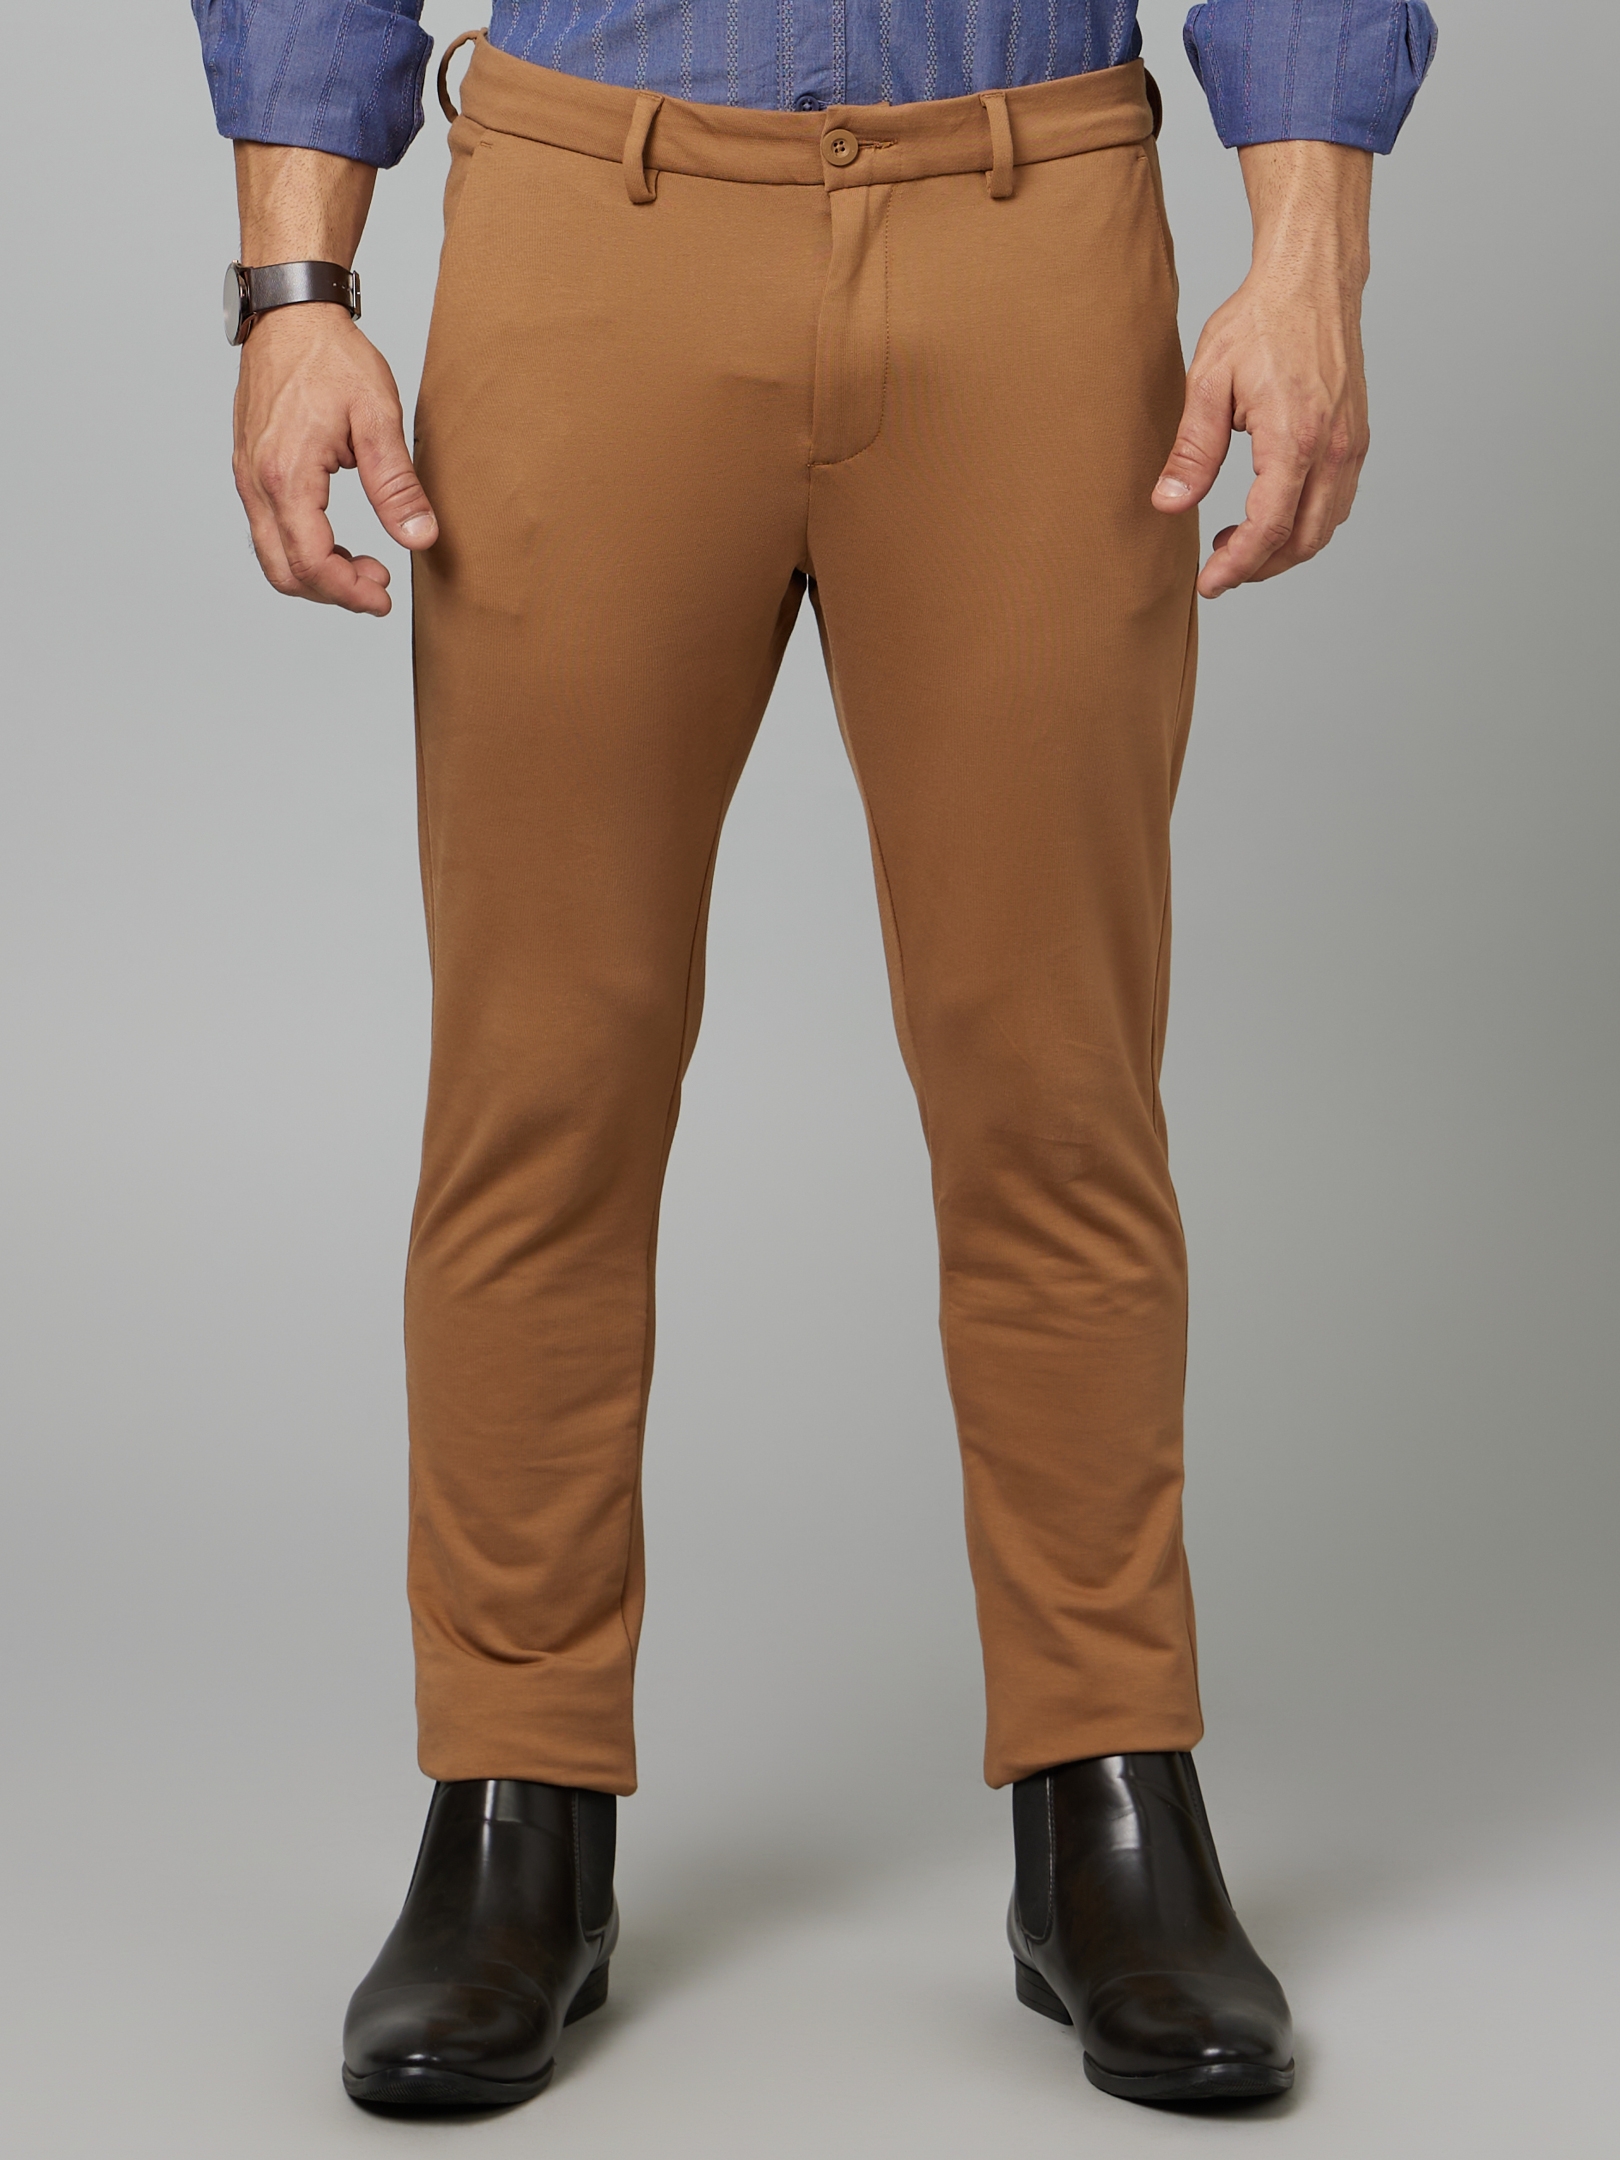 Fabulous Color of Plus Size Trousers for Men | johnpride